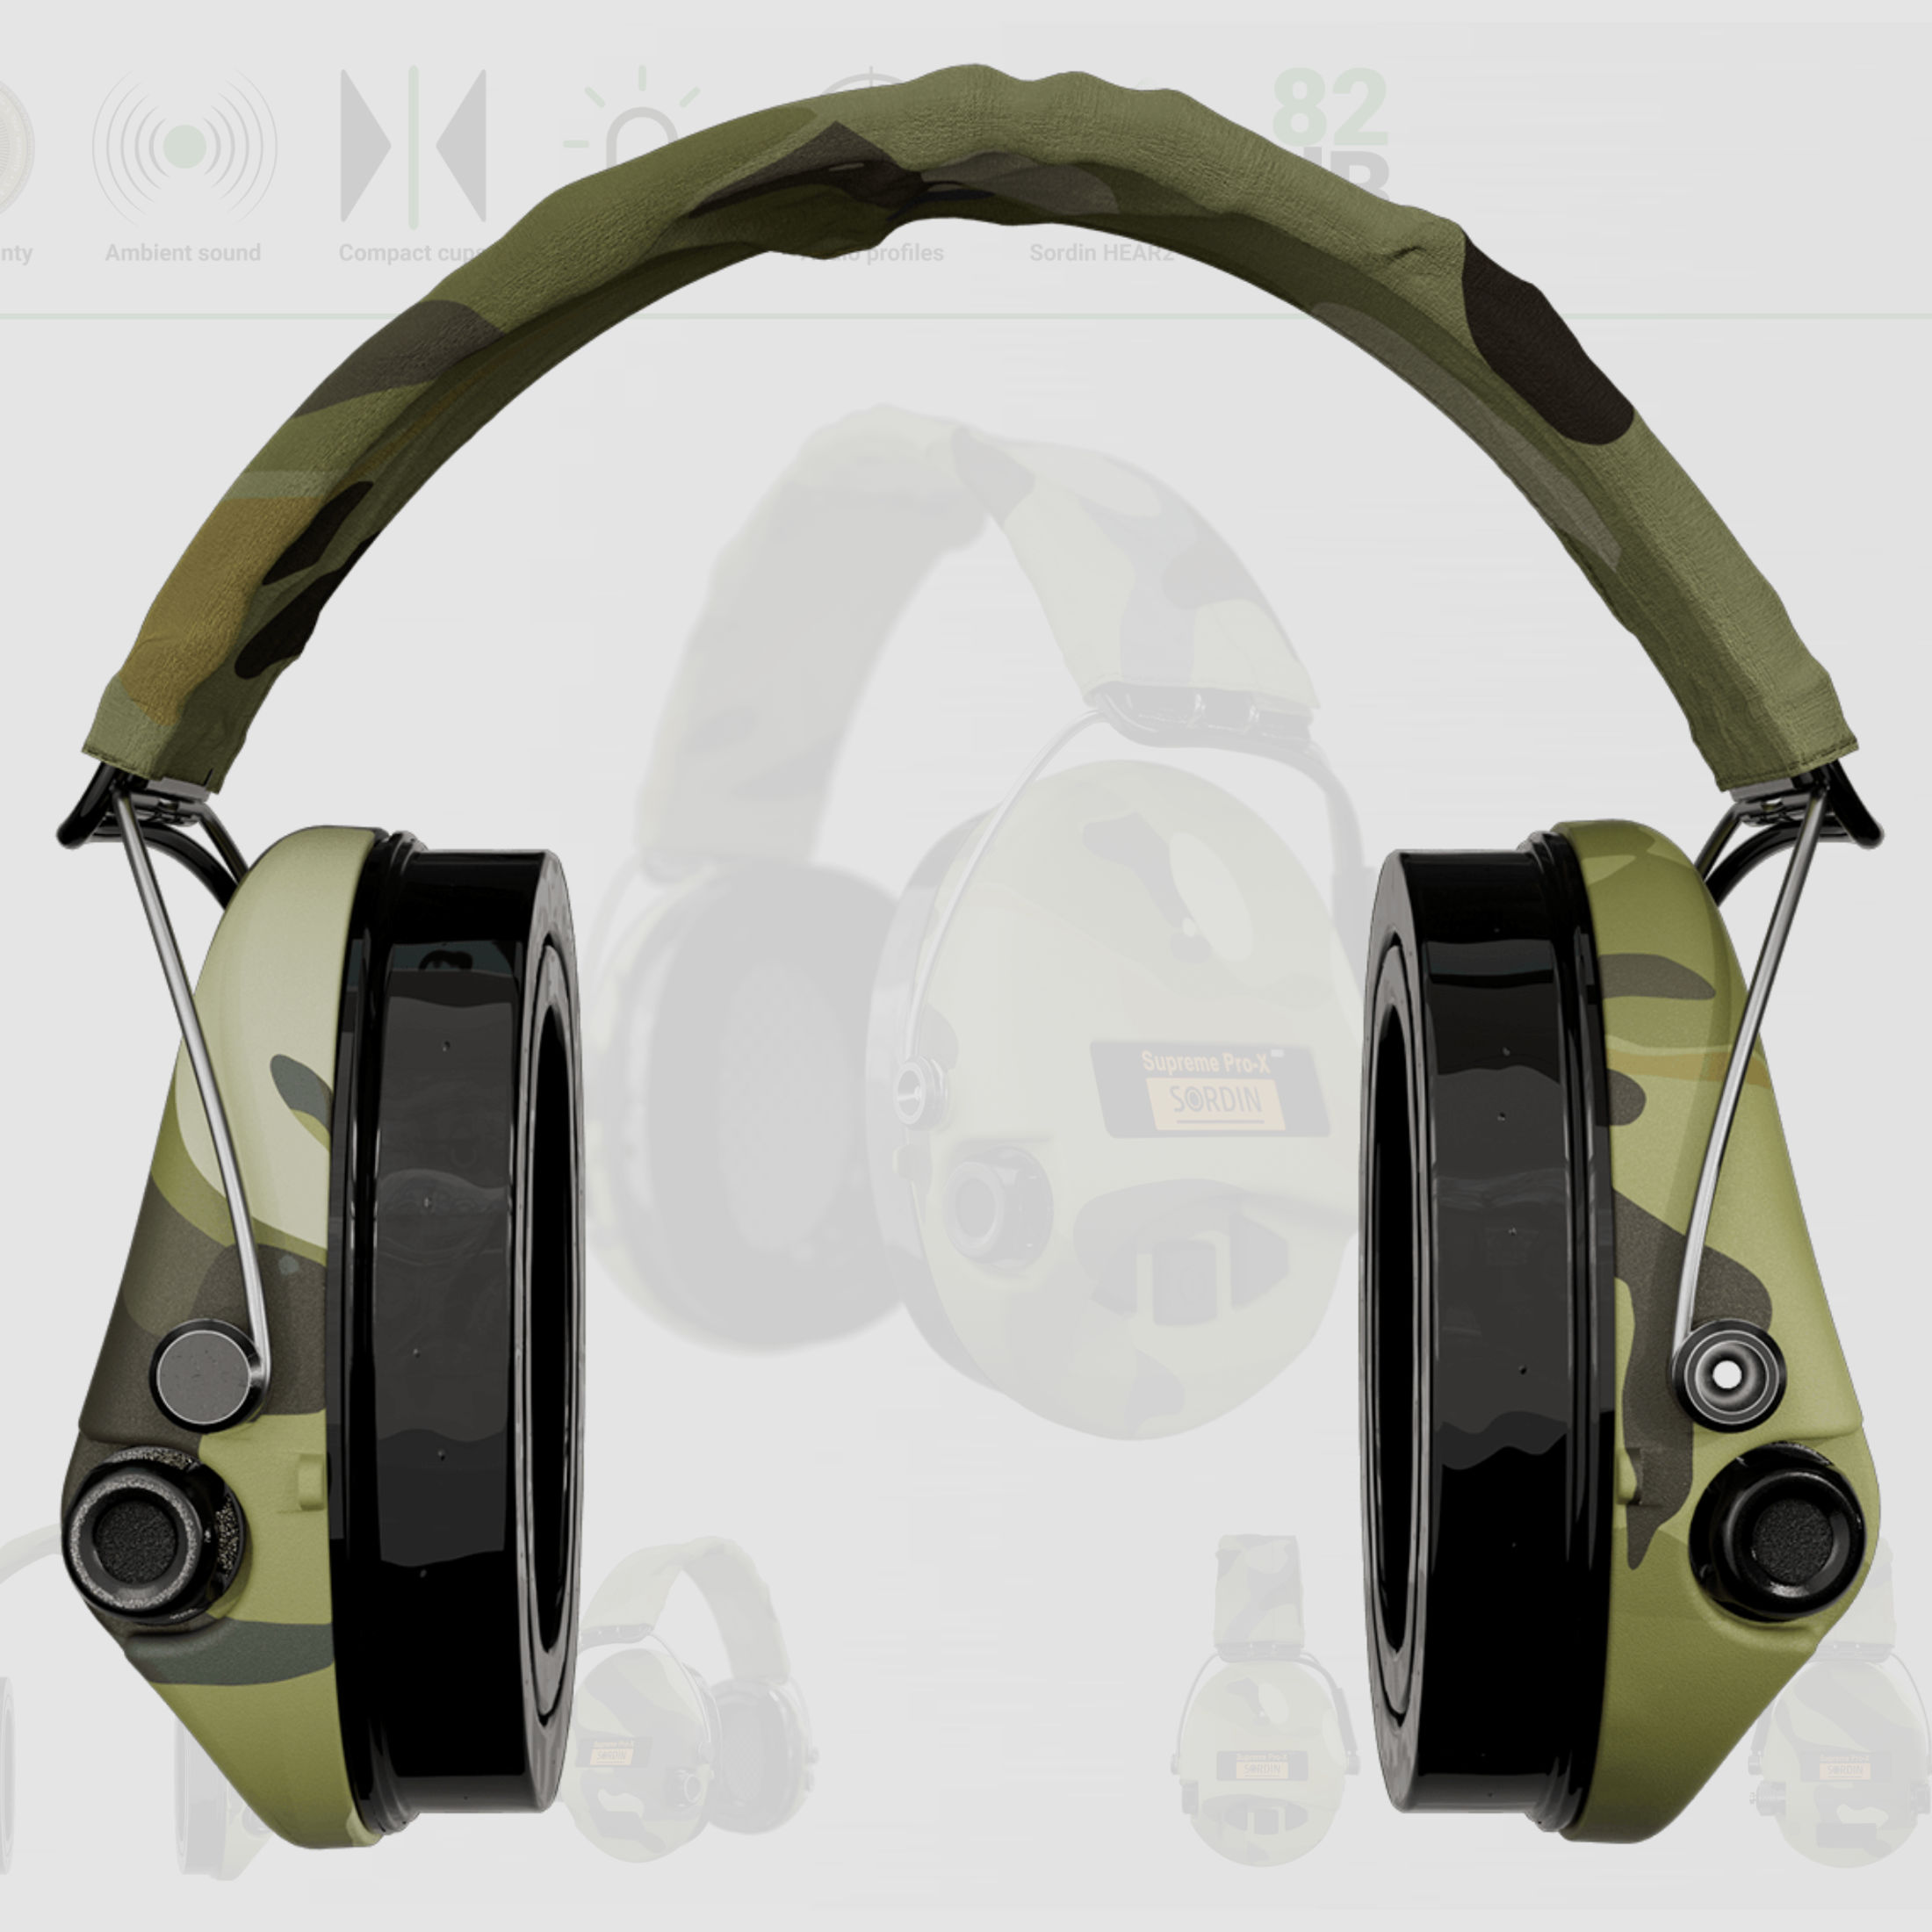 Sordin 75302-X-08-S Elektronischer Gehörschutz Supreme Camo Pro X LED Headband